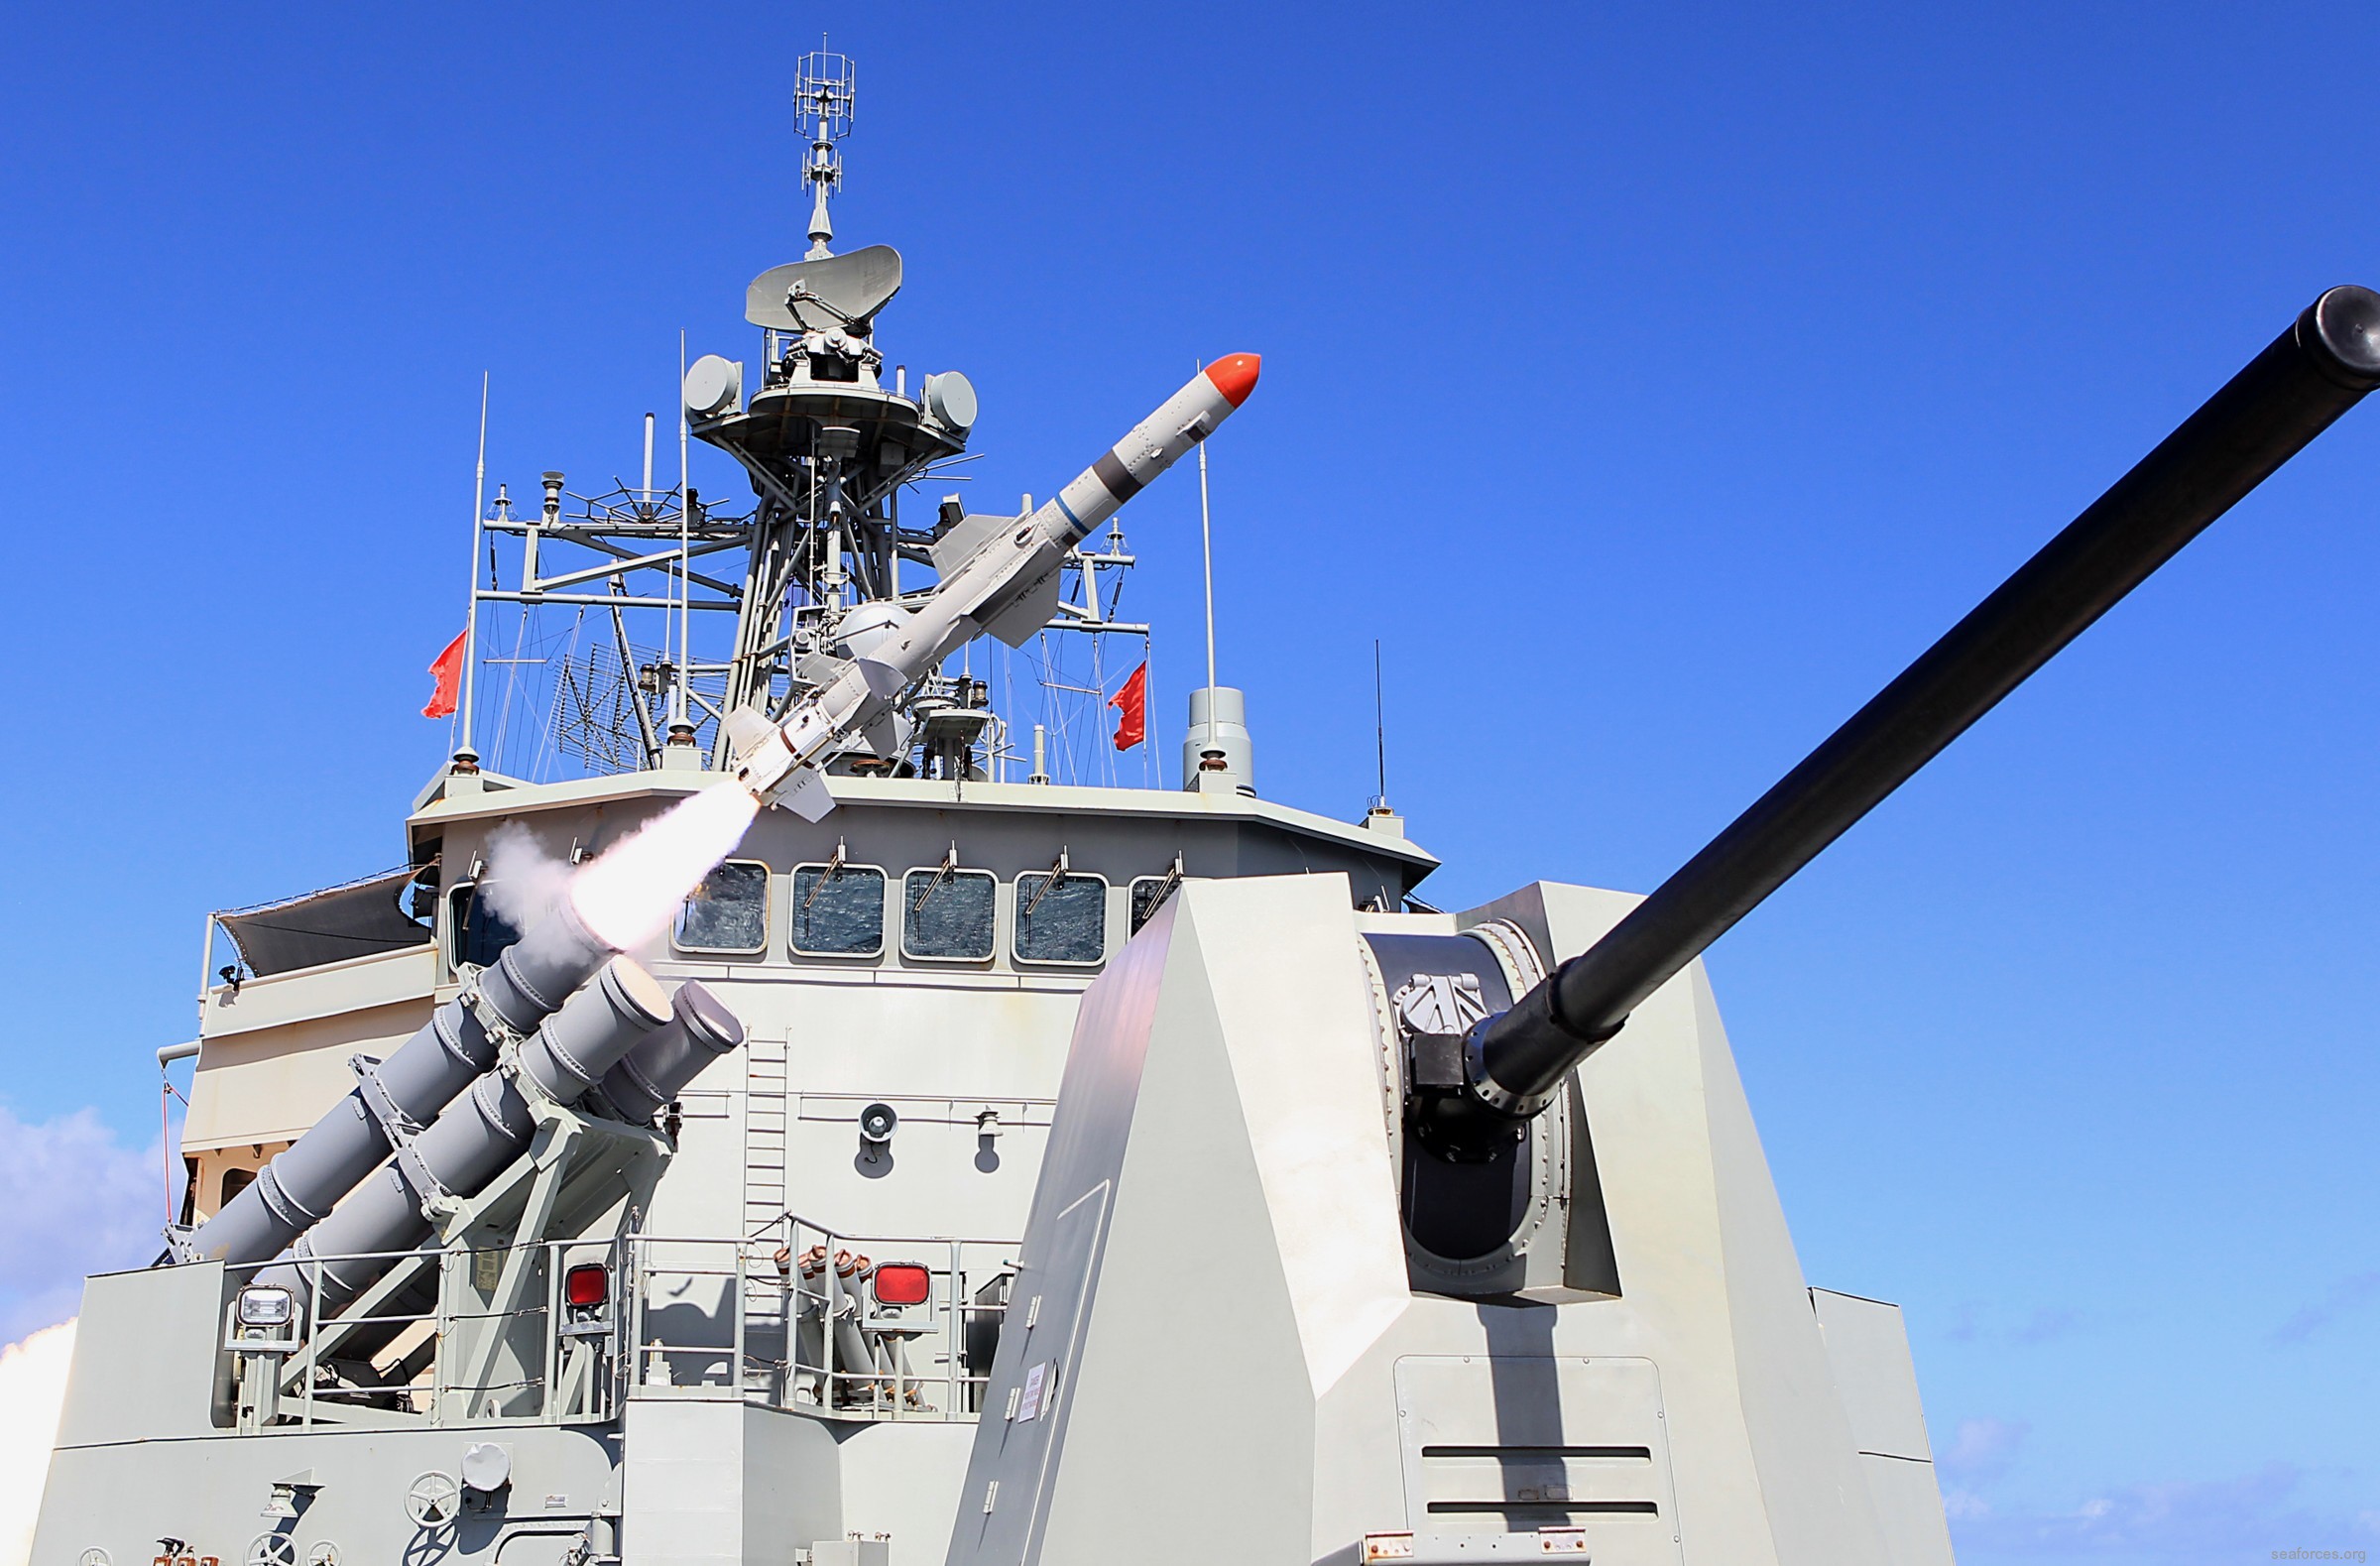 anzac class frigate ffh ffghm royal australian navy mk-141 launcher rgm-84 harpoon ssm missile